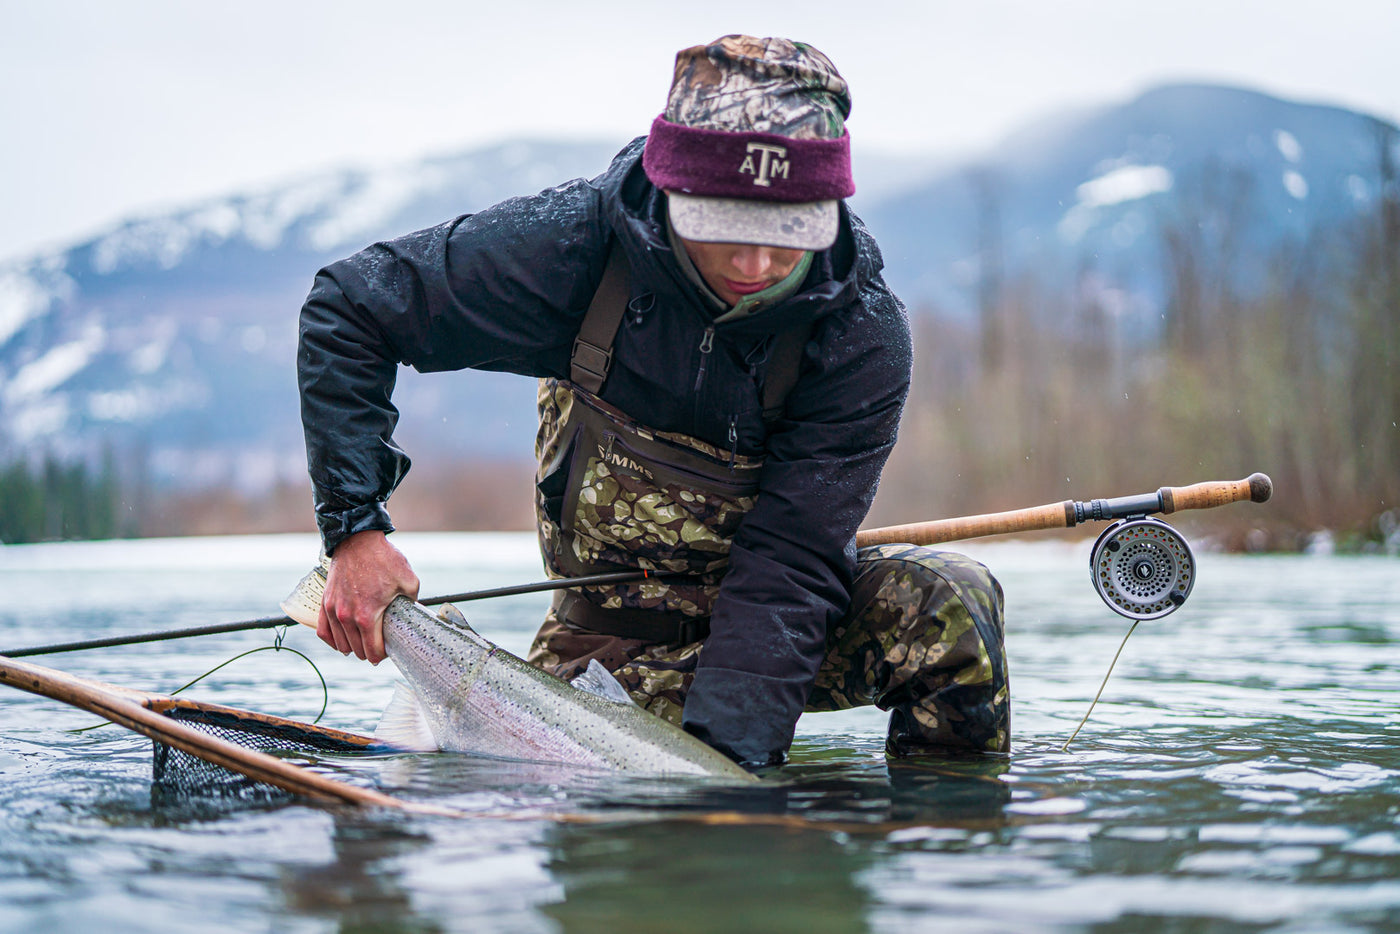 Skagit River Fly Fishing - Coho, Steelhead, Bull Trout